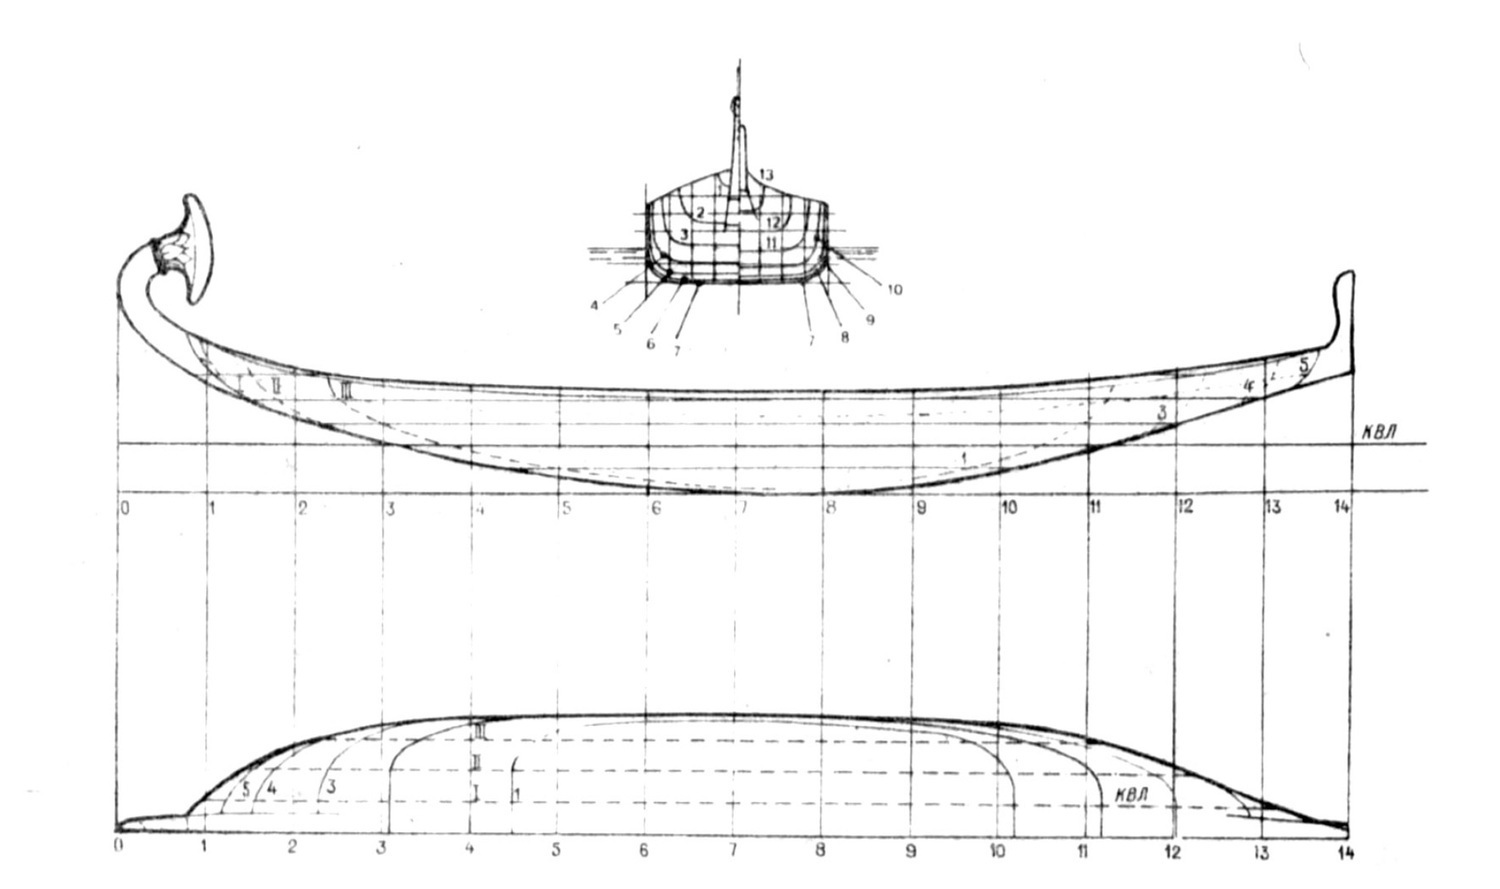 Теоретический чертеж египетского судна времен XVIII династии